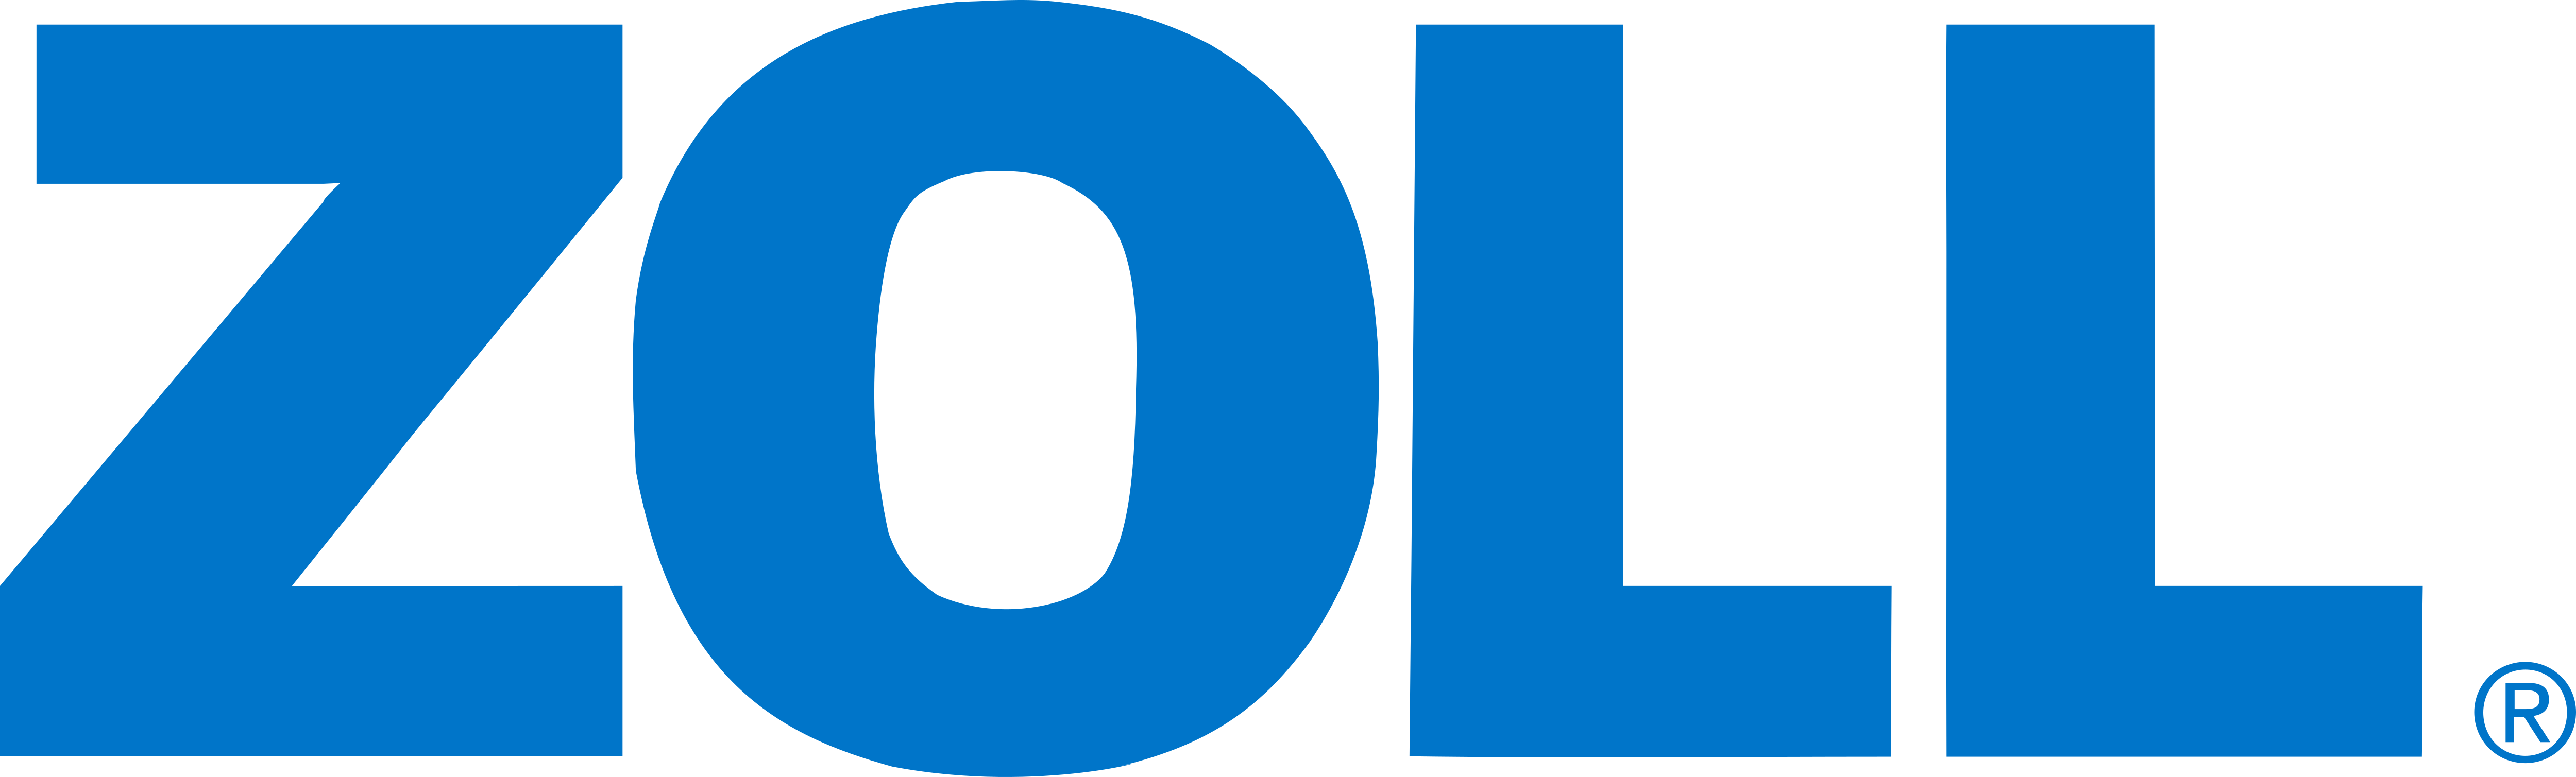 ZOLL_Medical_Corporation_Logo